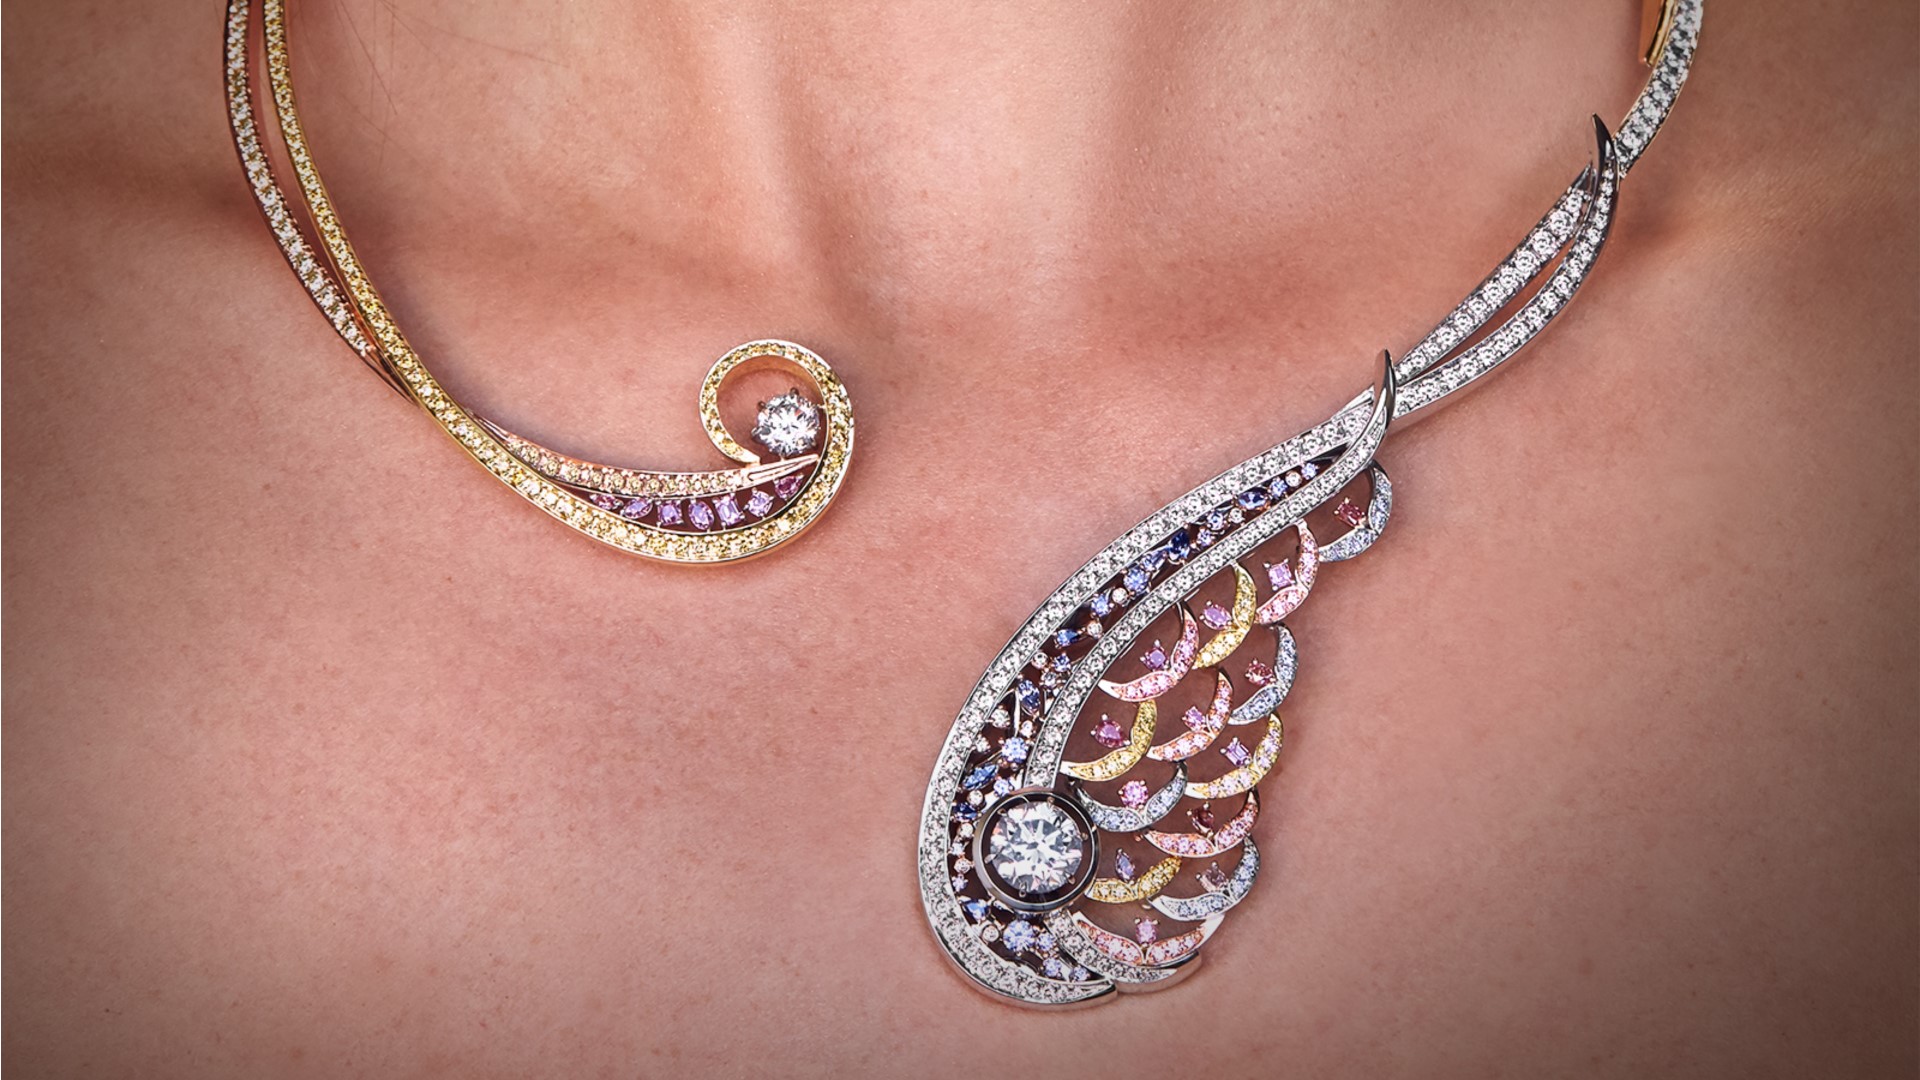 Argyle Dreaming necklace